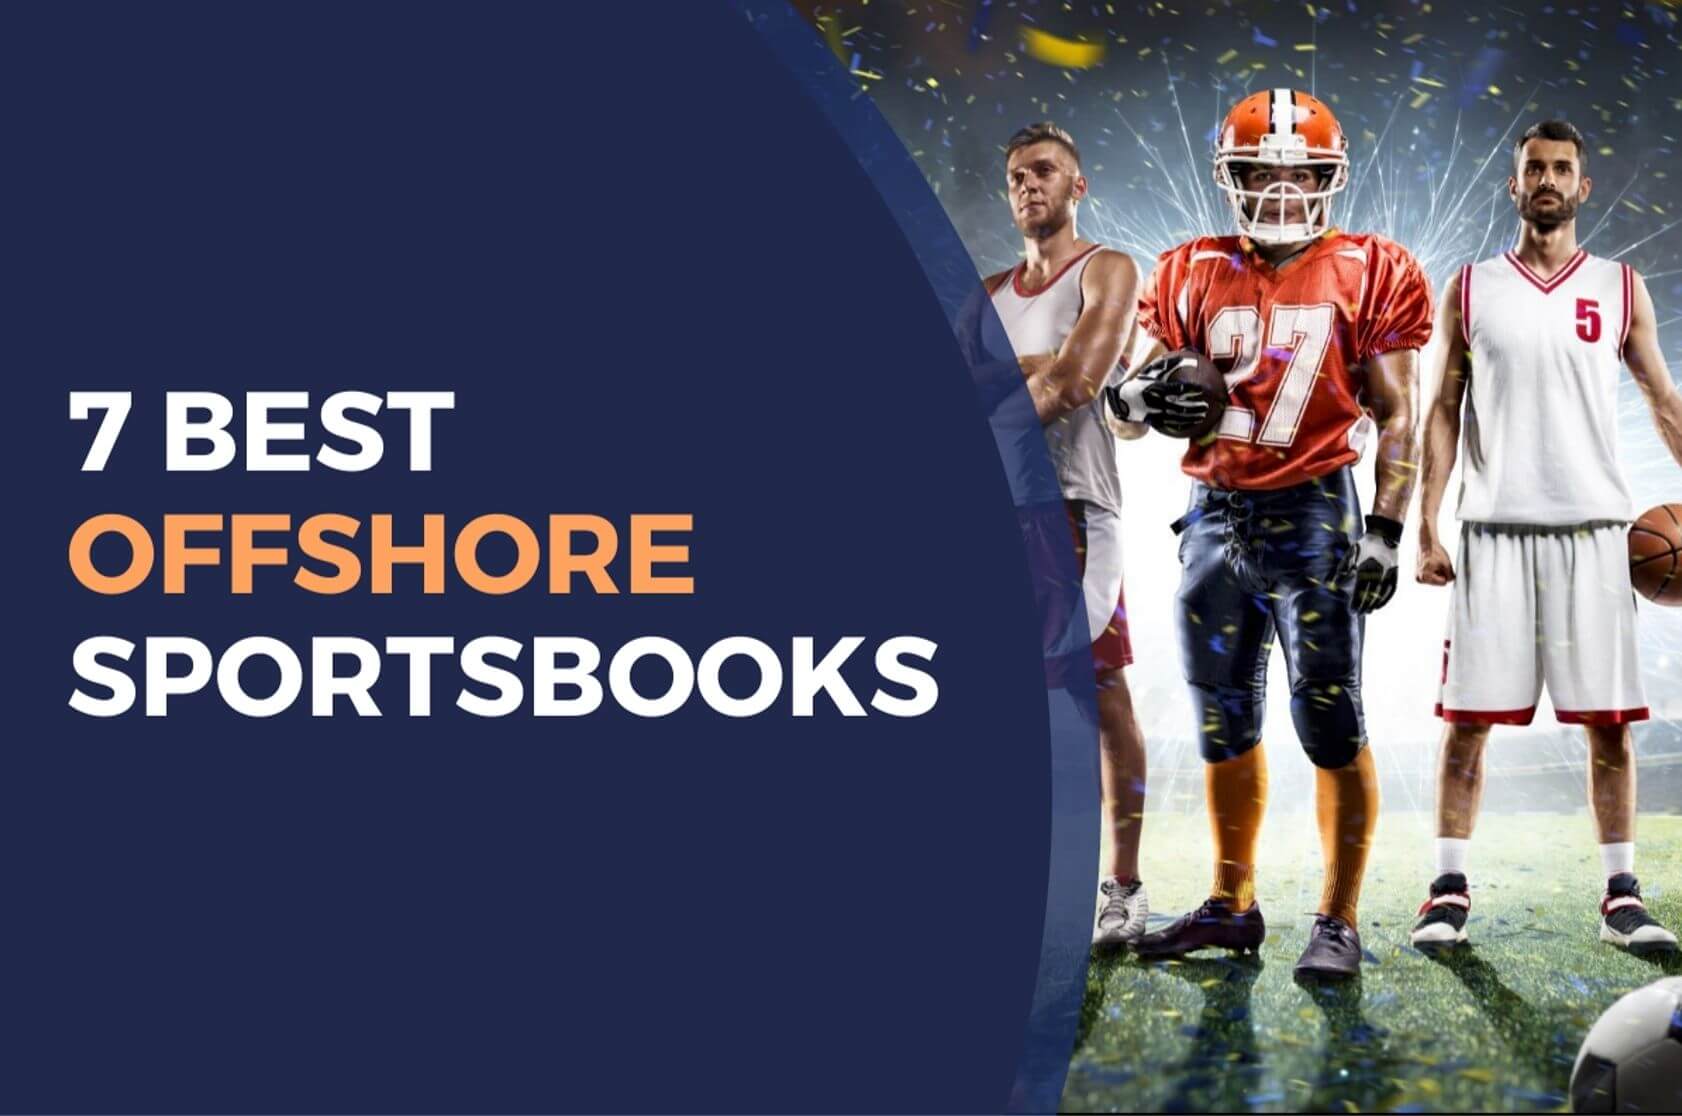 Photo: best offshore sportsbook